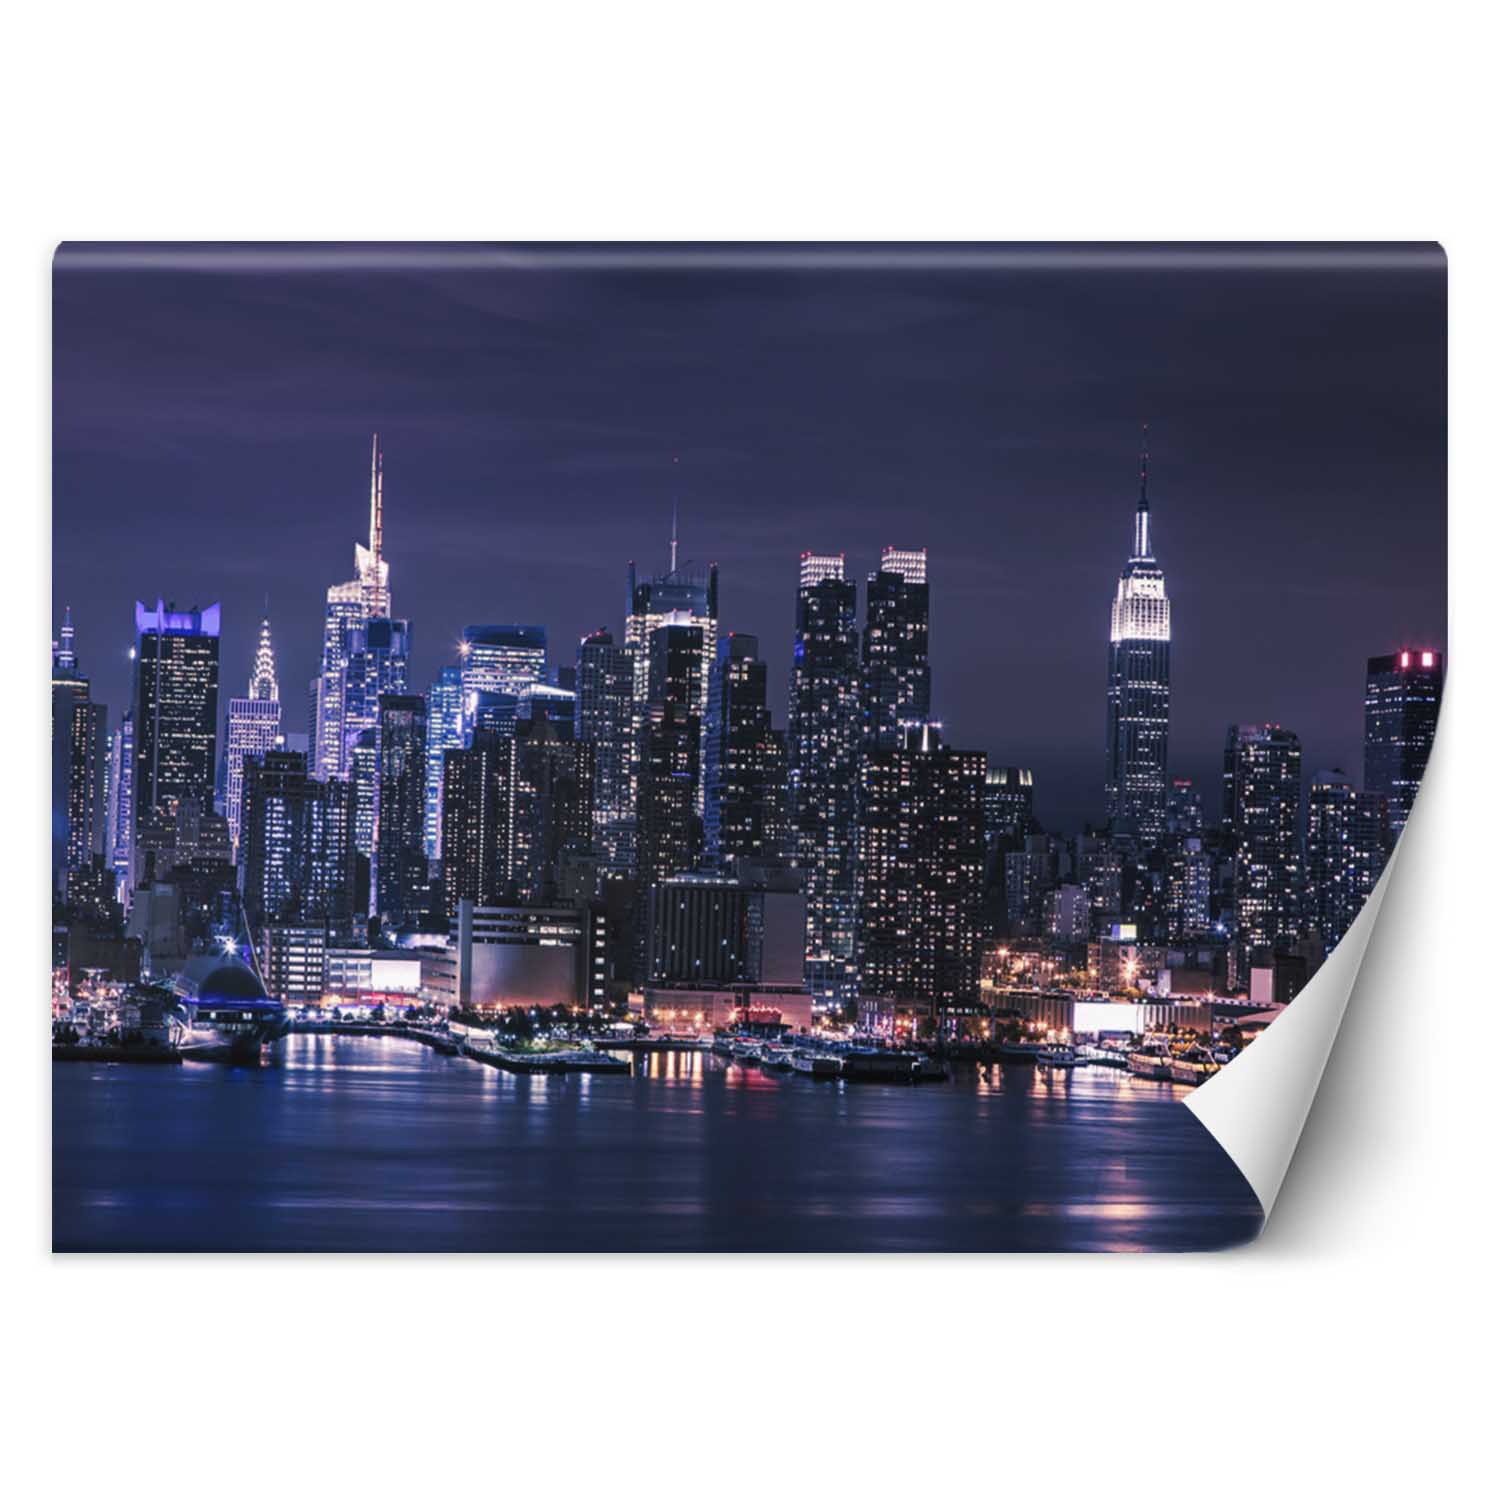 Trend24 – Behang – New York ‘S Nachts – Vliesbehang – Fotobehang – Behang Woonkamer – 350x245x2 cm – Incl. behanglijm